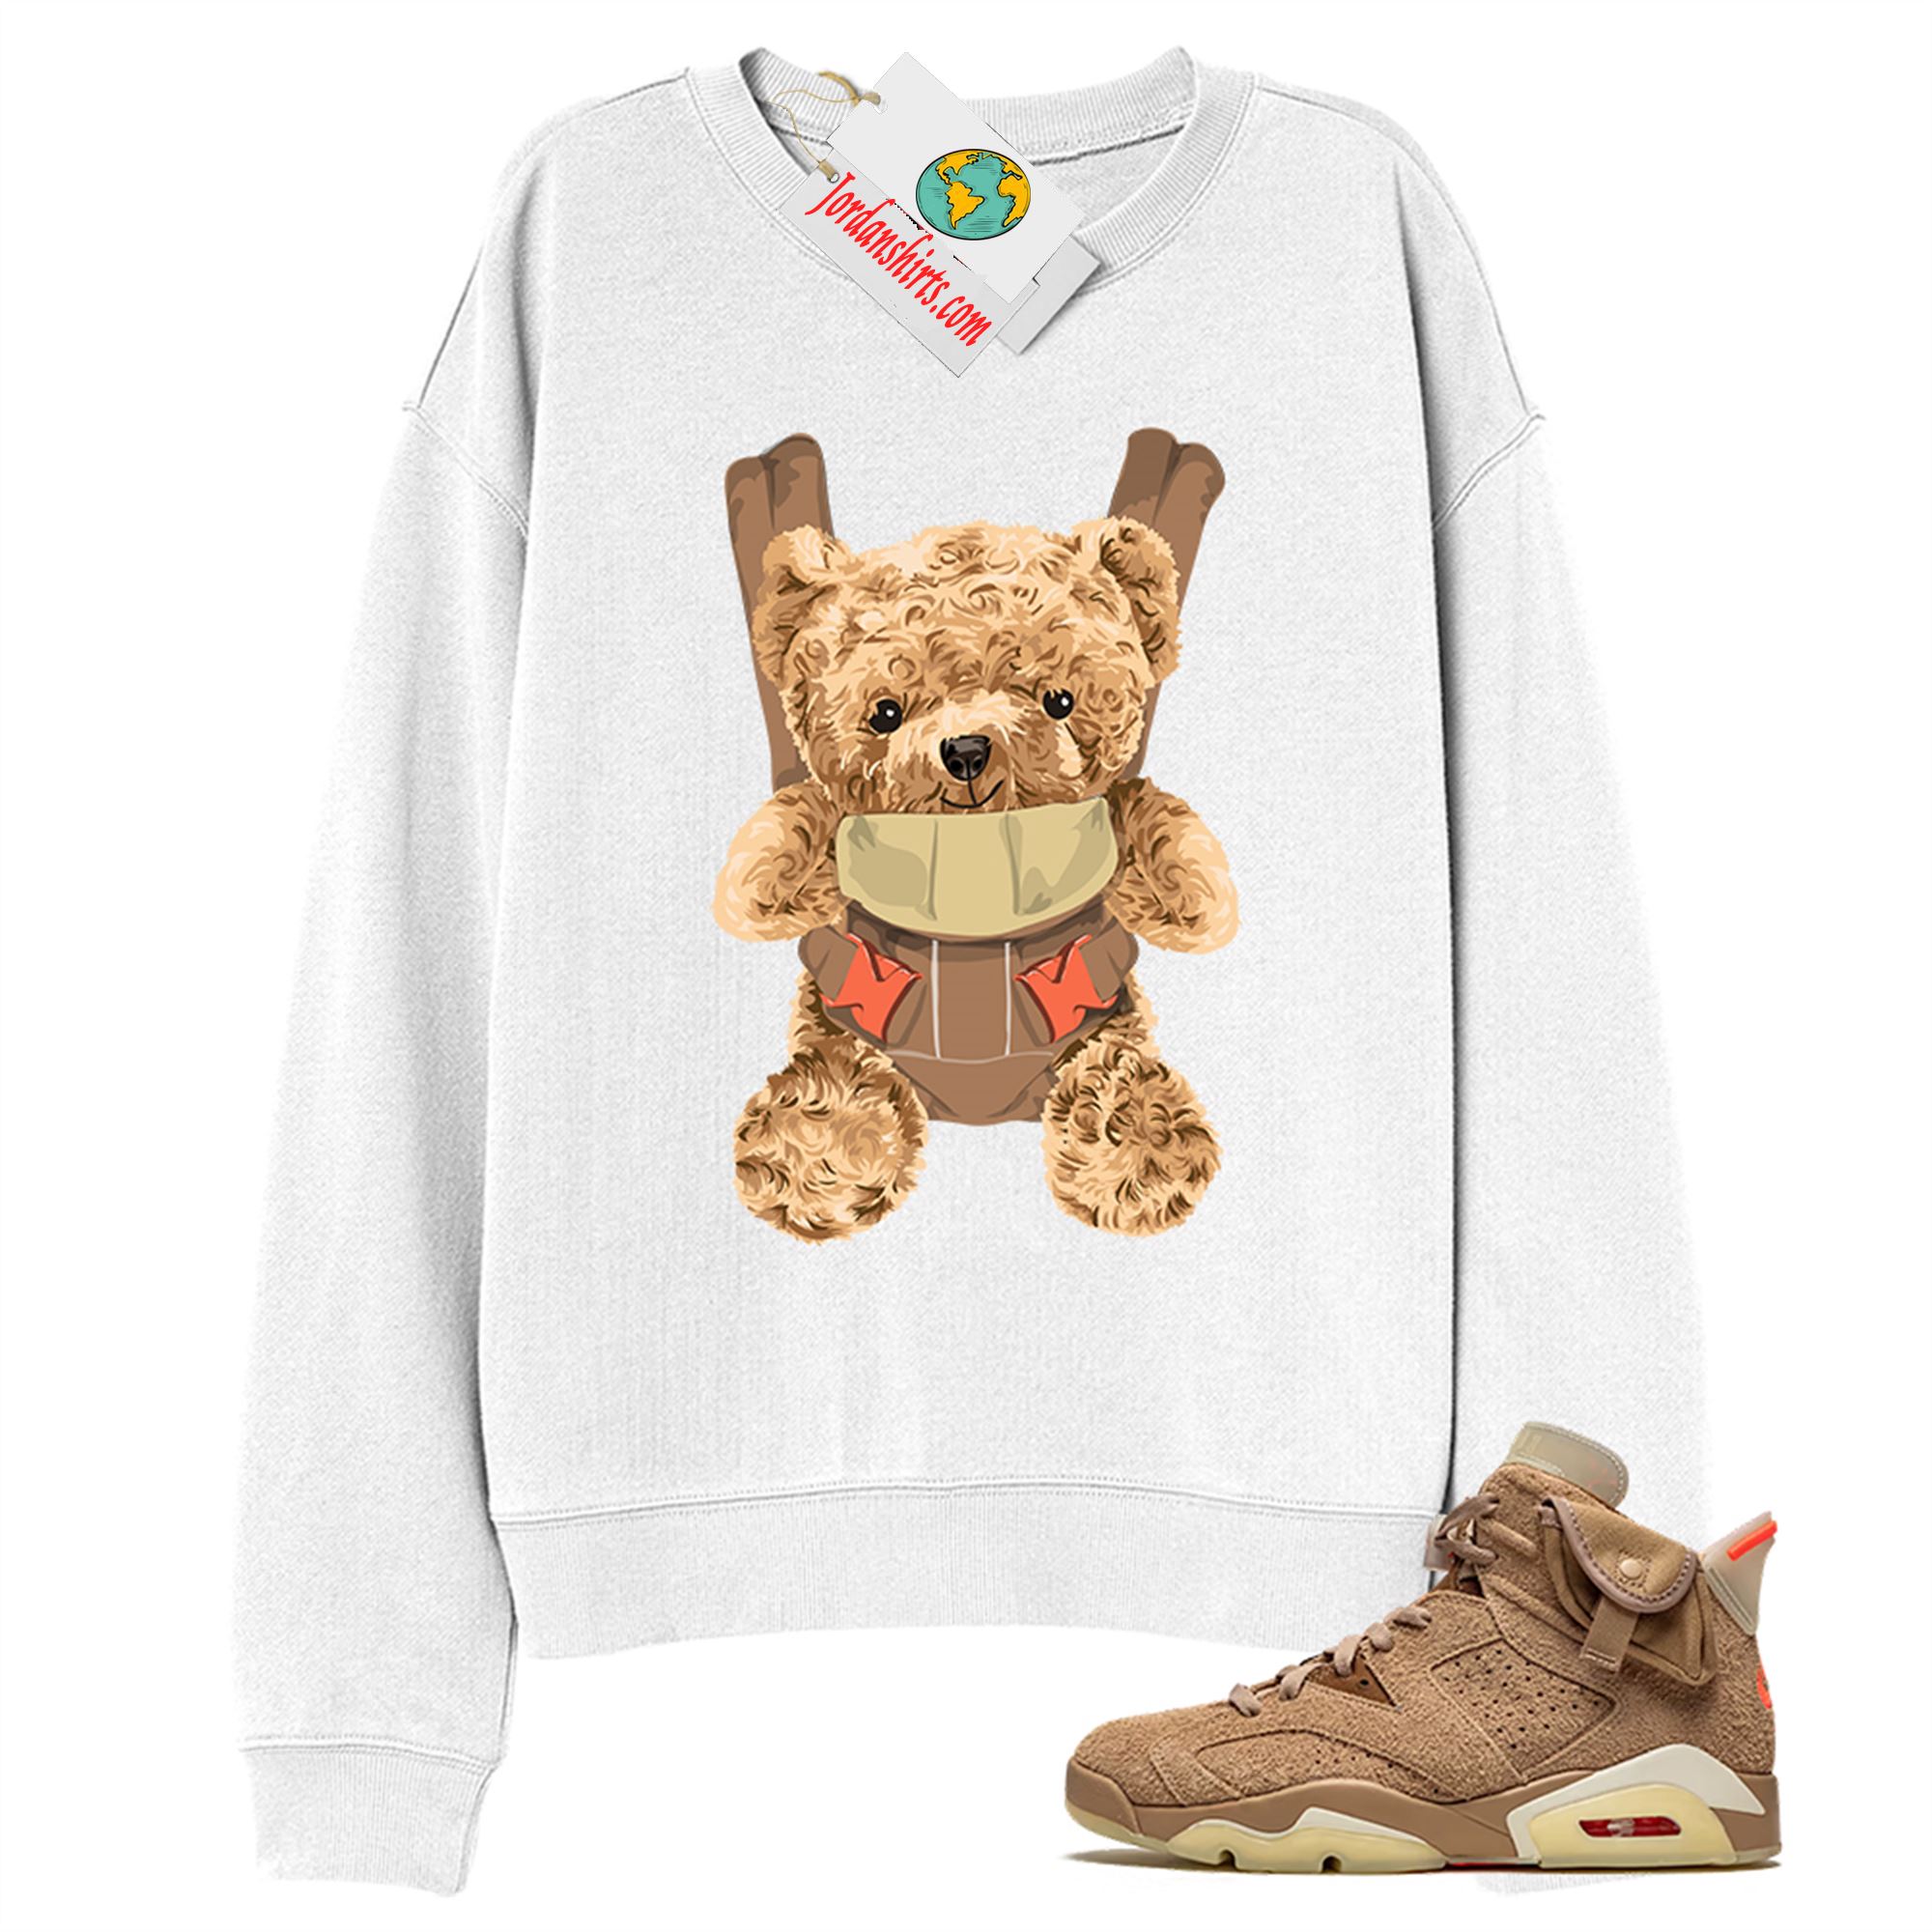 Jordan 6 Sweatshirt, Teddy Bear Bag White Sweatshirt Air Jordan 6 Travis Scott 6s Full Size Up To 5xl